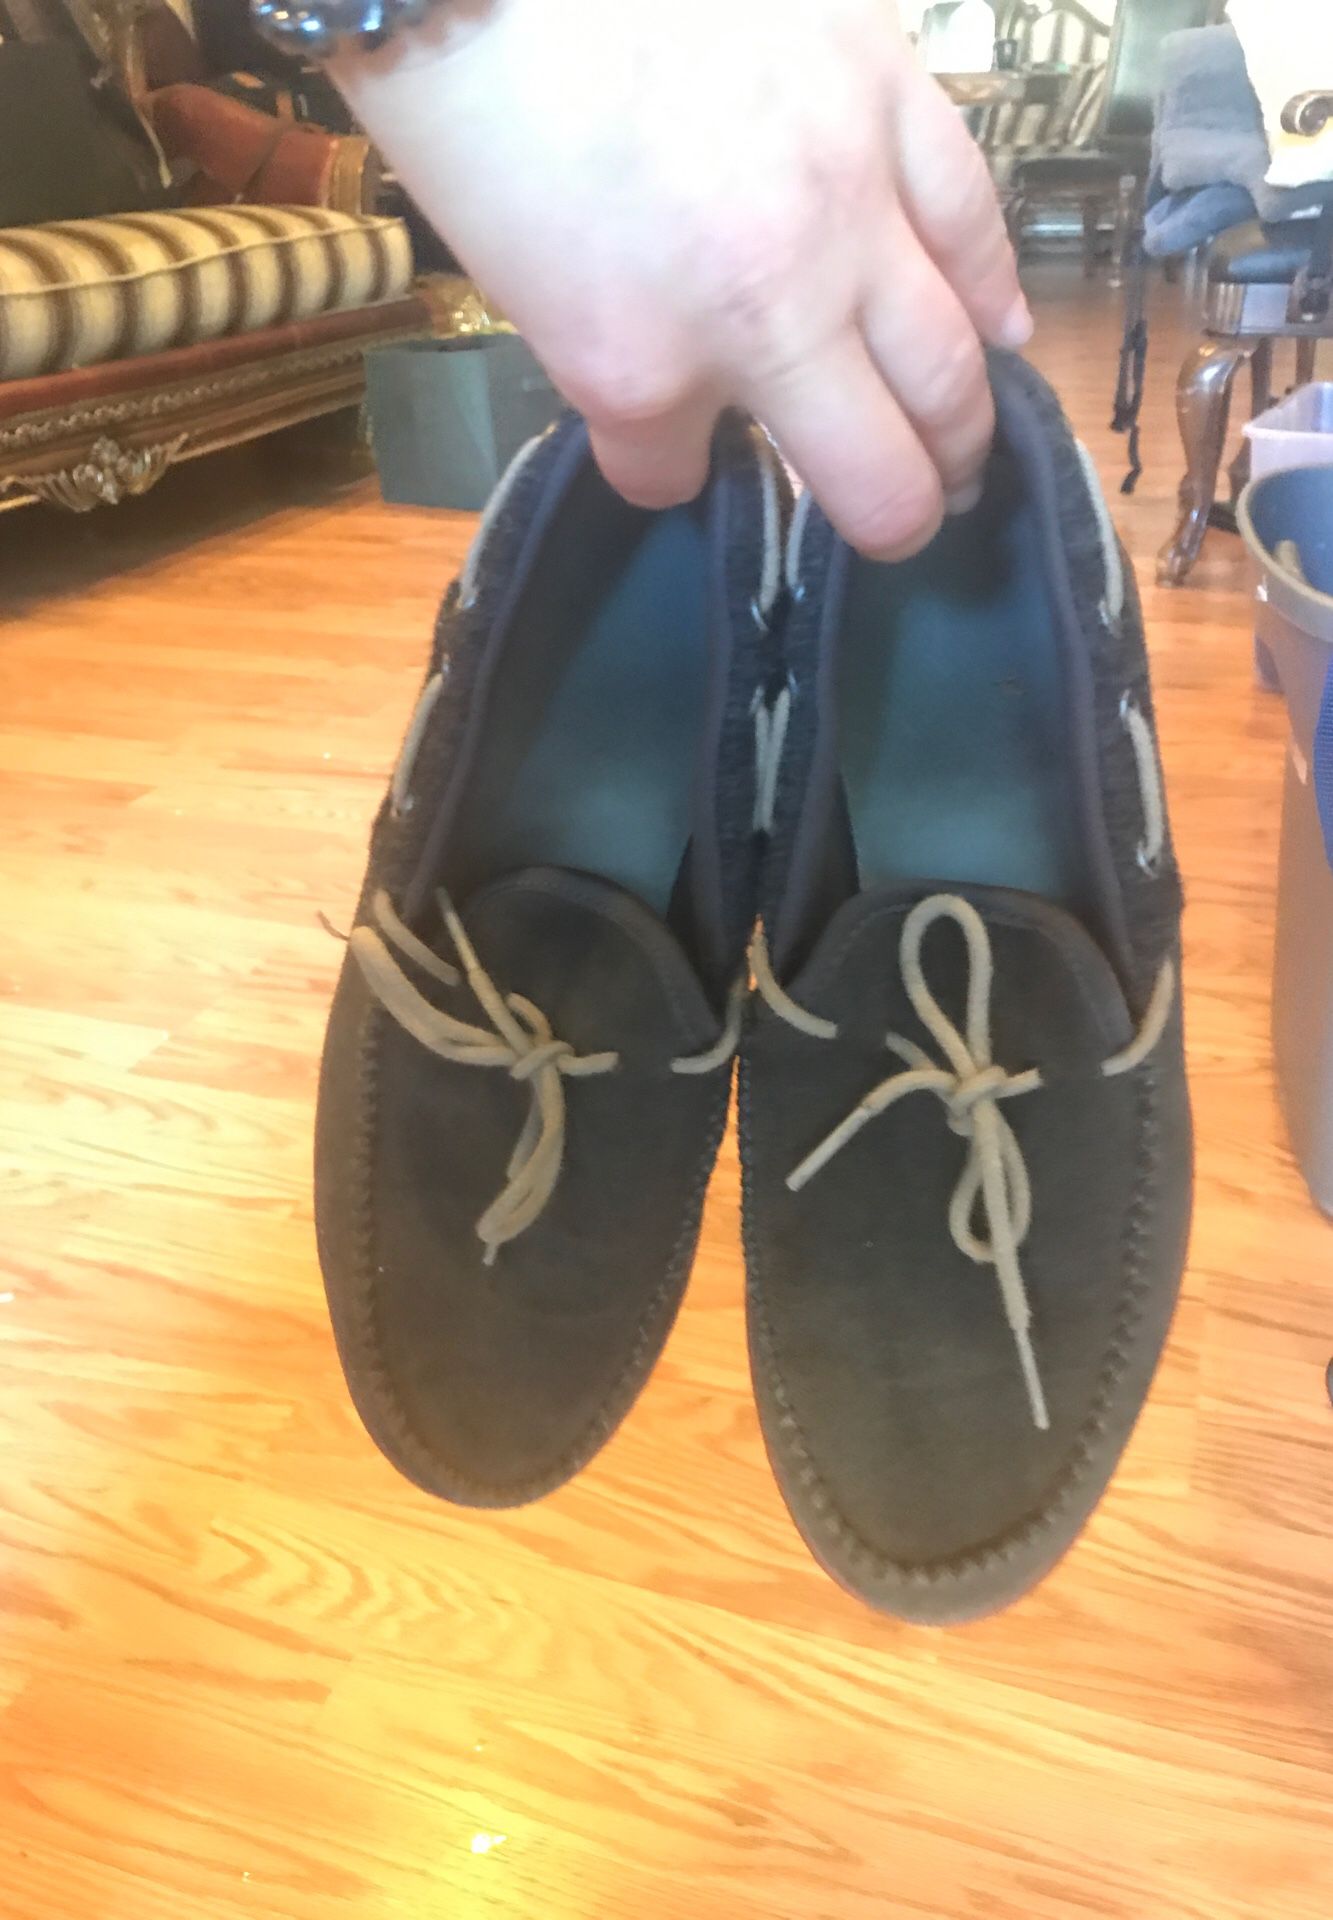 Patagonia shoes